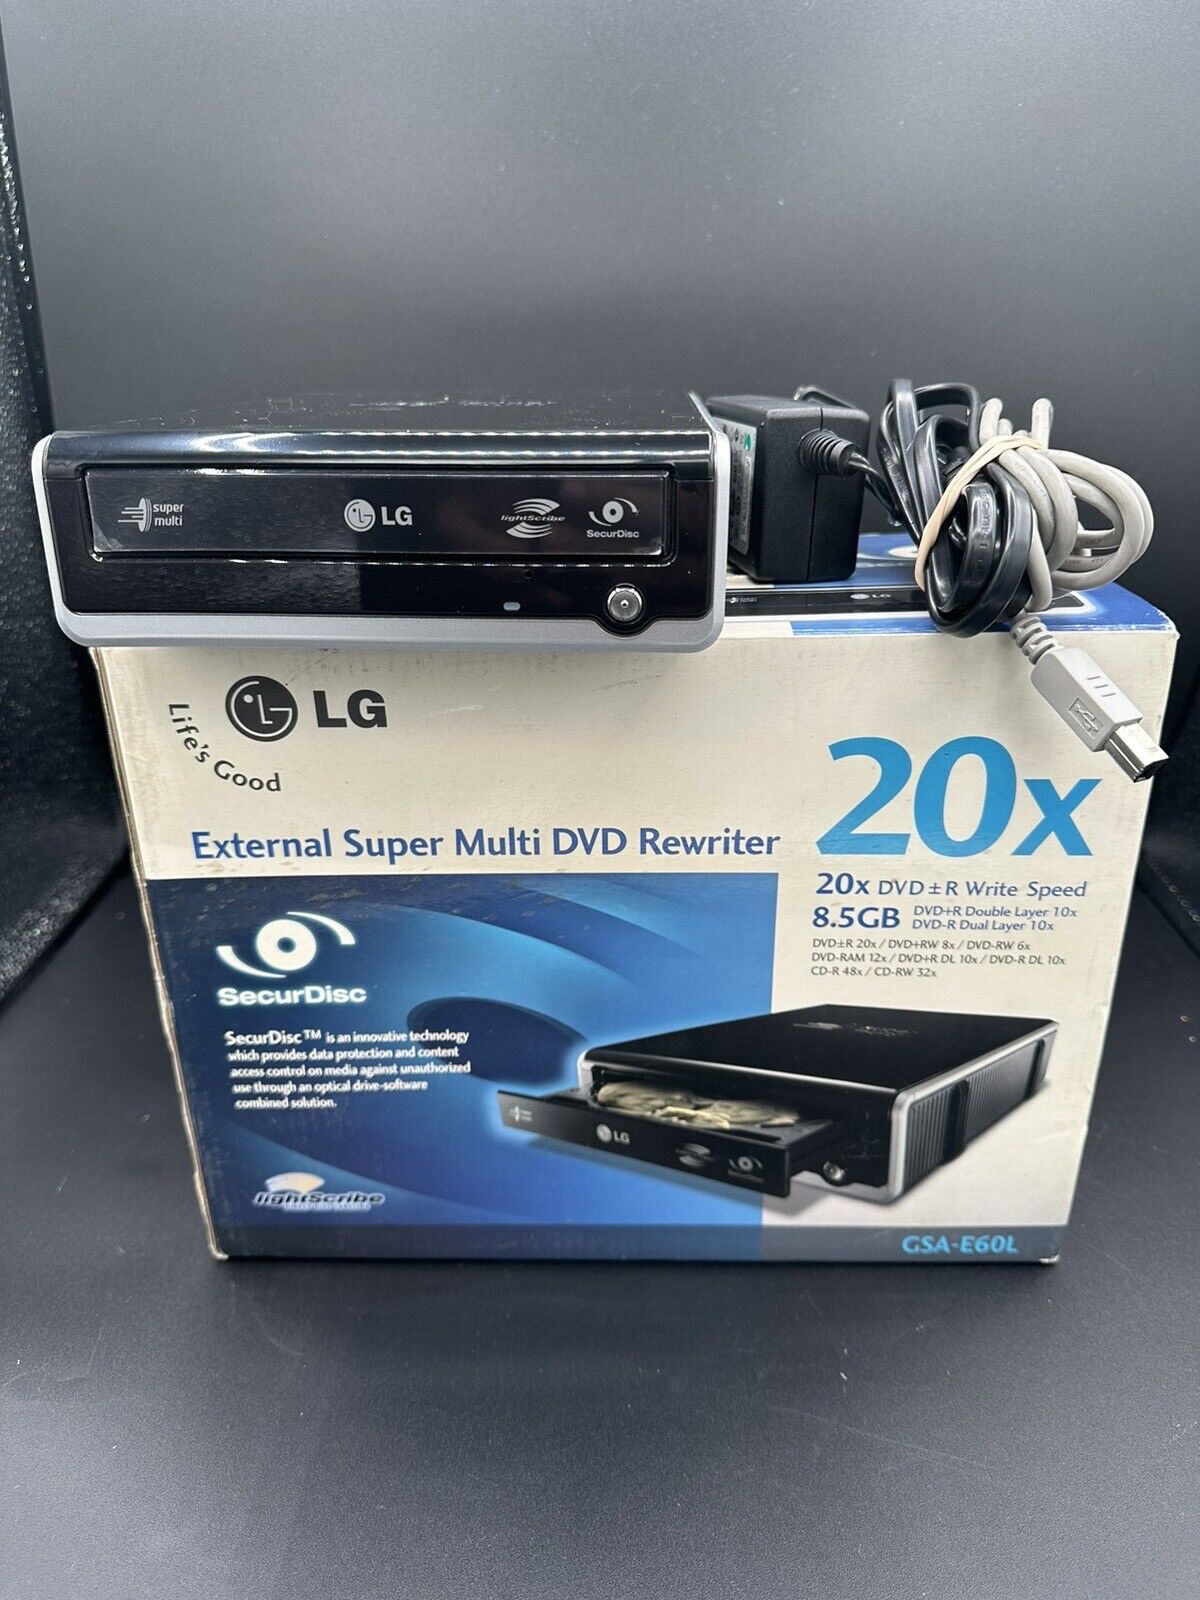 LG GSA-E60L External Super Multi DVD Rewriter 20x Write Speed 8.5 GB